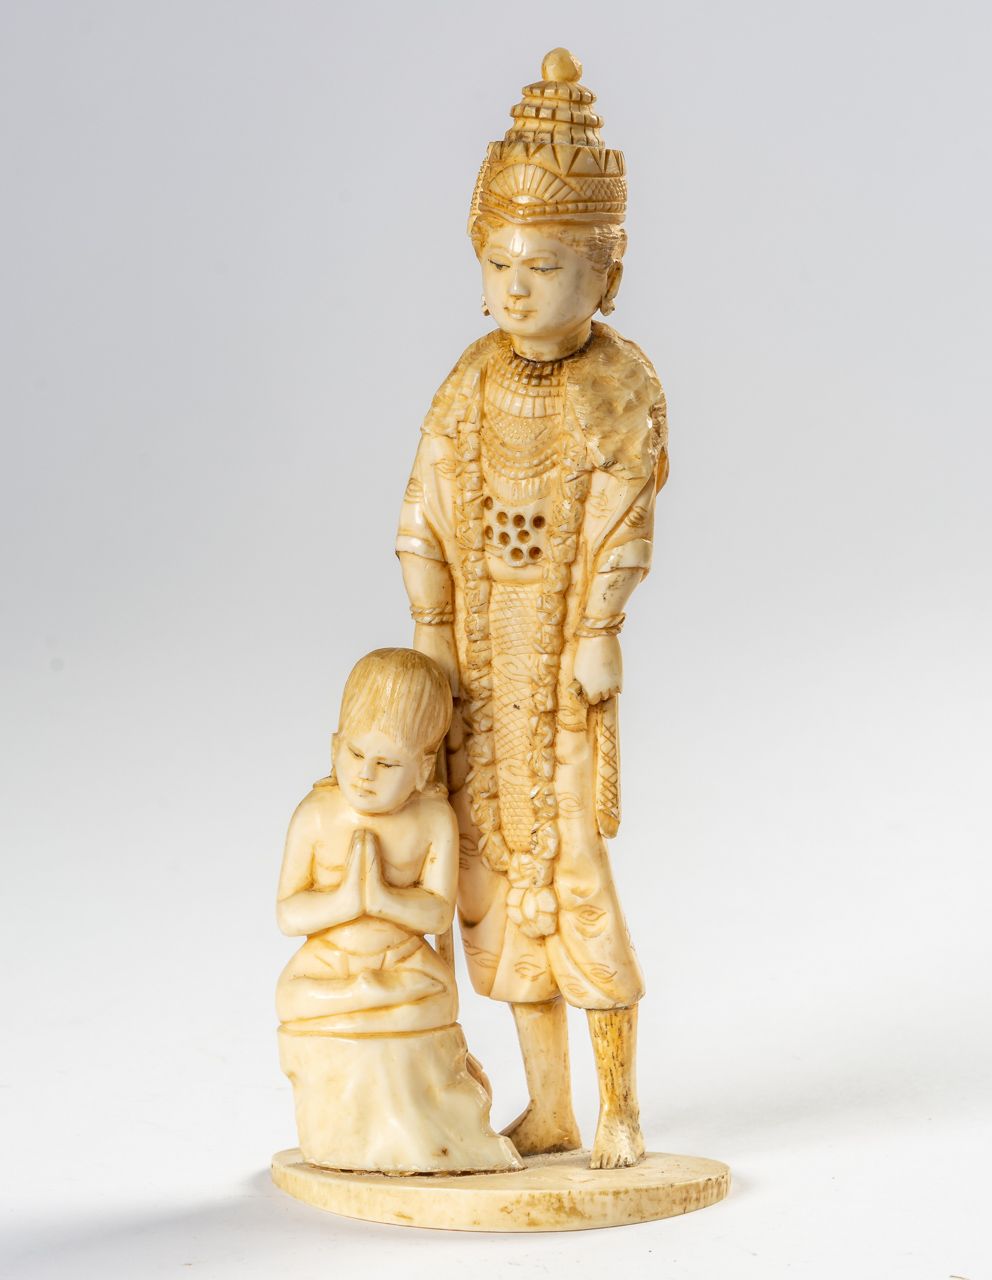 FEIN GESCHNITZTE ELFENBEIN-FIGUR 中国/日本，大概在1900年左右

高19.5厘米



精雕细琢的象牙人

中国/日本，大概&hellip;